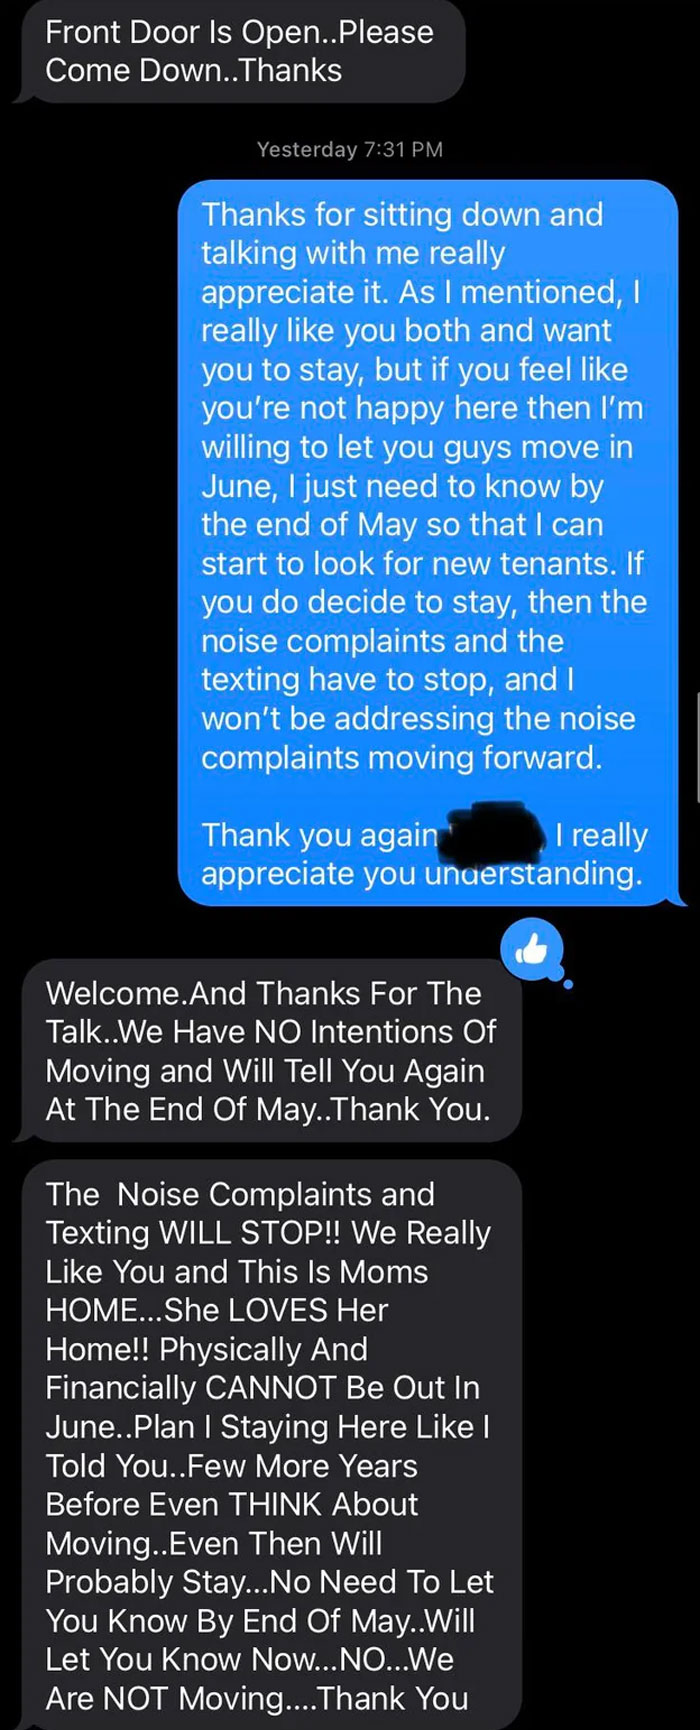 Update On Noise Complaints